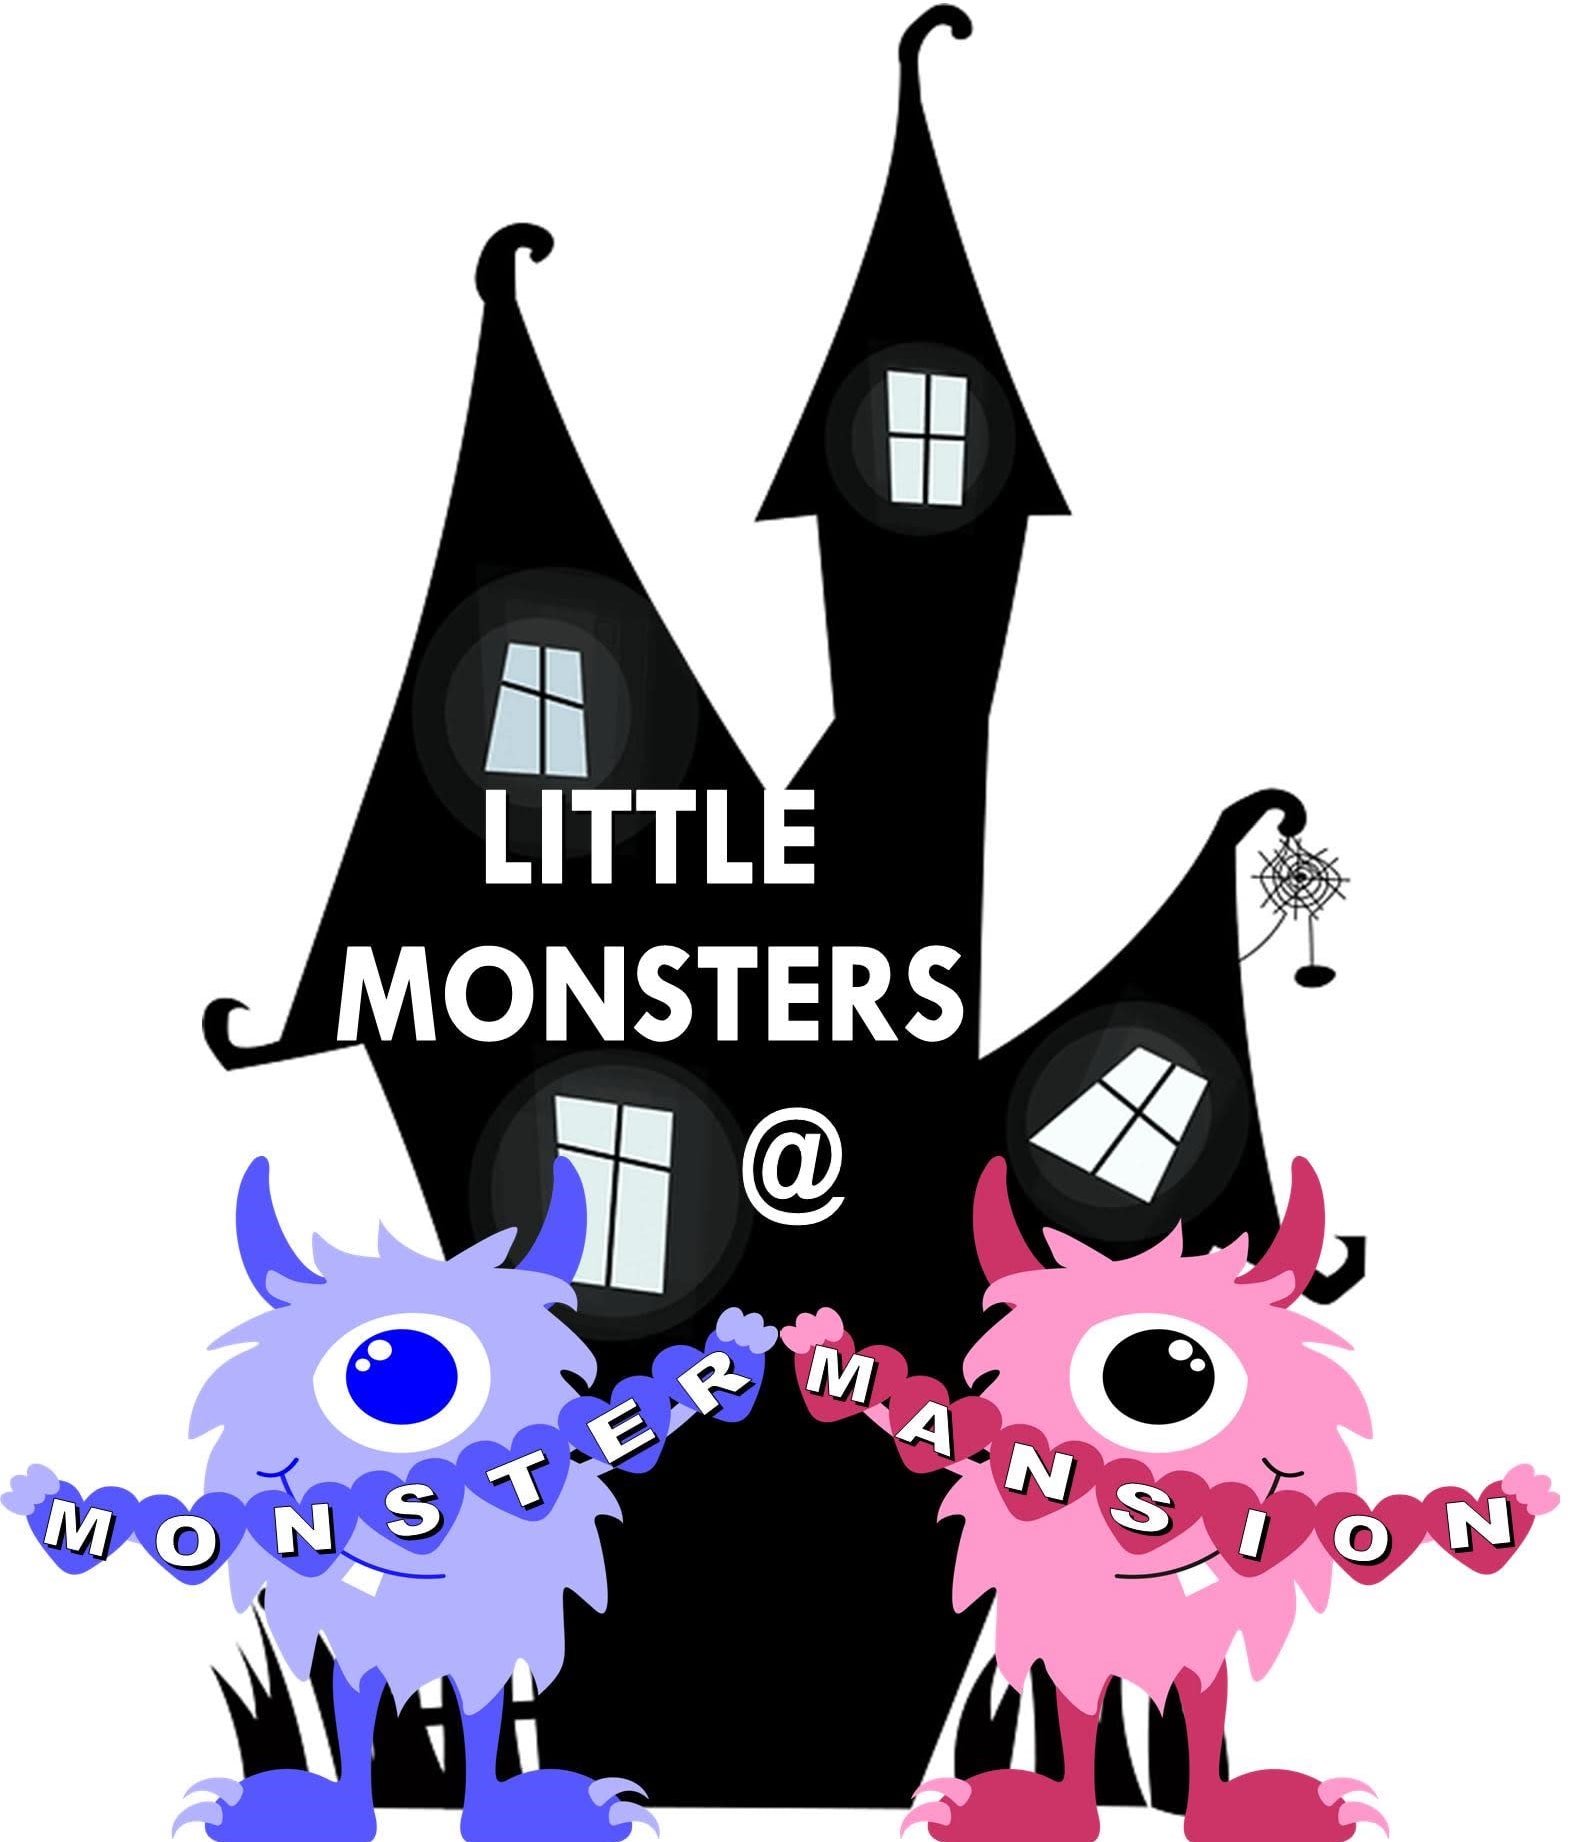 Little Monsters at Monster Mansion